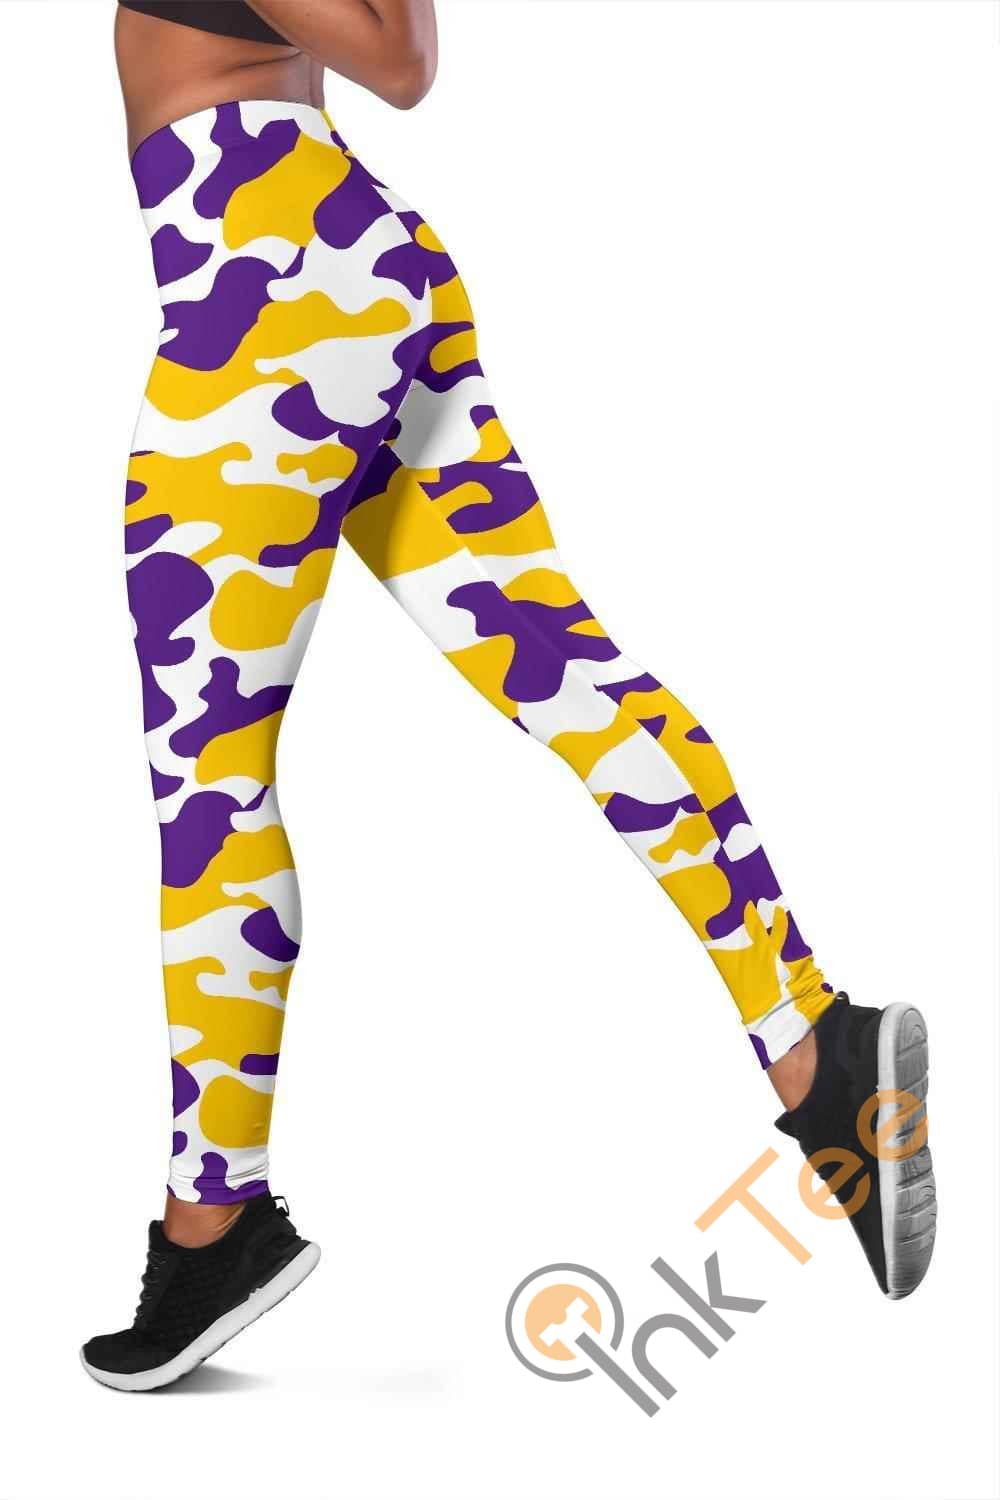 Inktee Store - Minnesota Vikings Inspired Tru Camo 3D All Over Print For Yoga Fitness Fashion Women'S Leggings Image